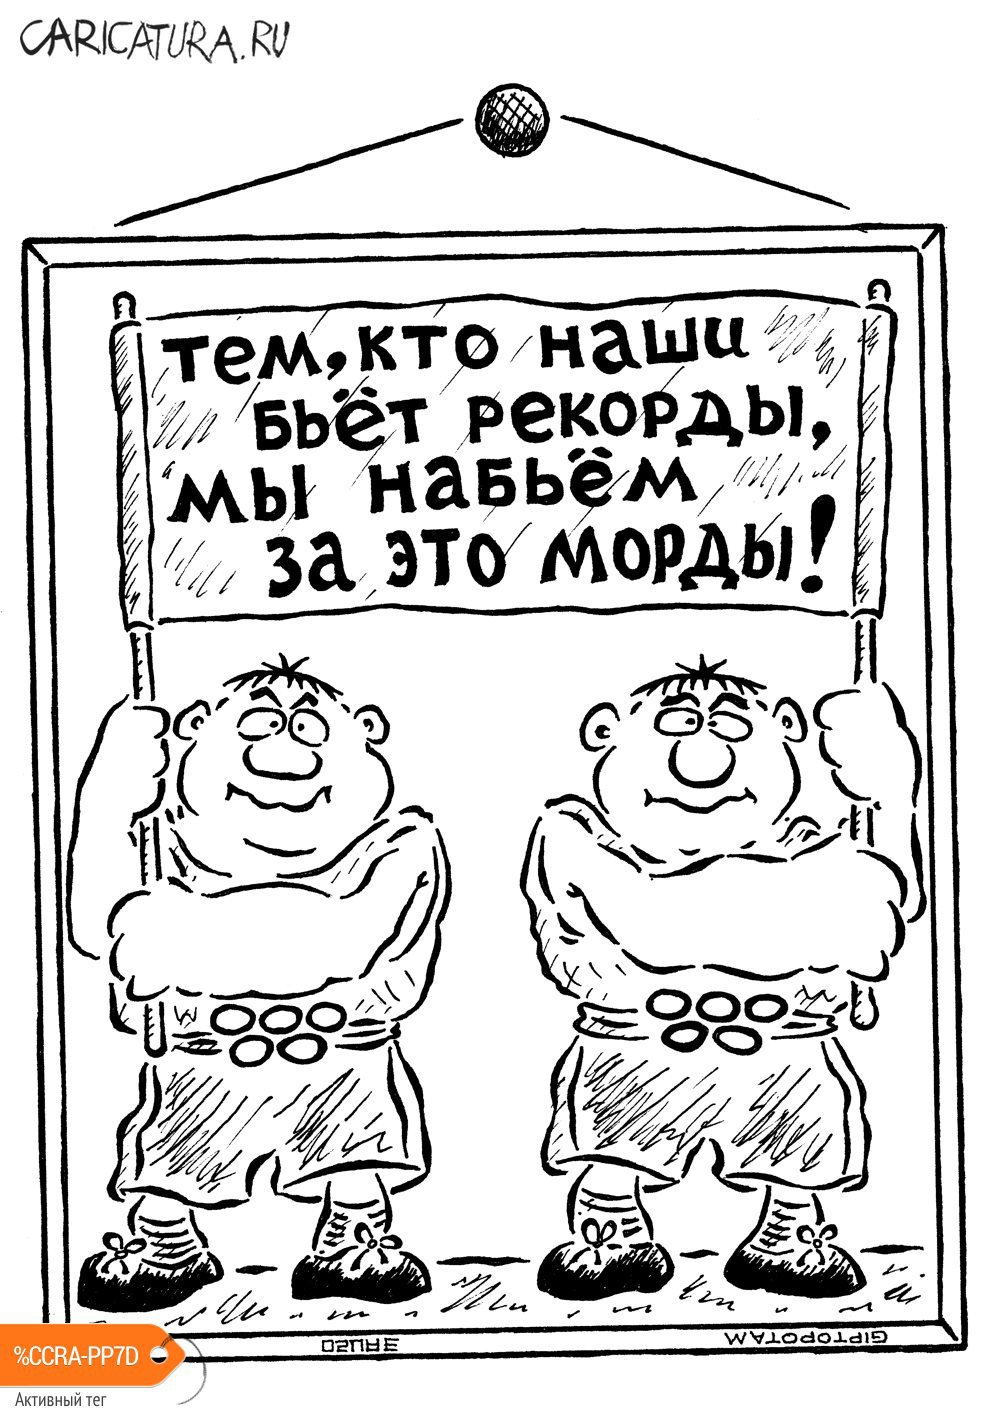 Карикатура "Готов к труду и обор...моты", Александр Евангелистов